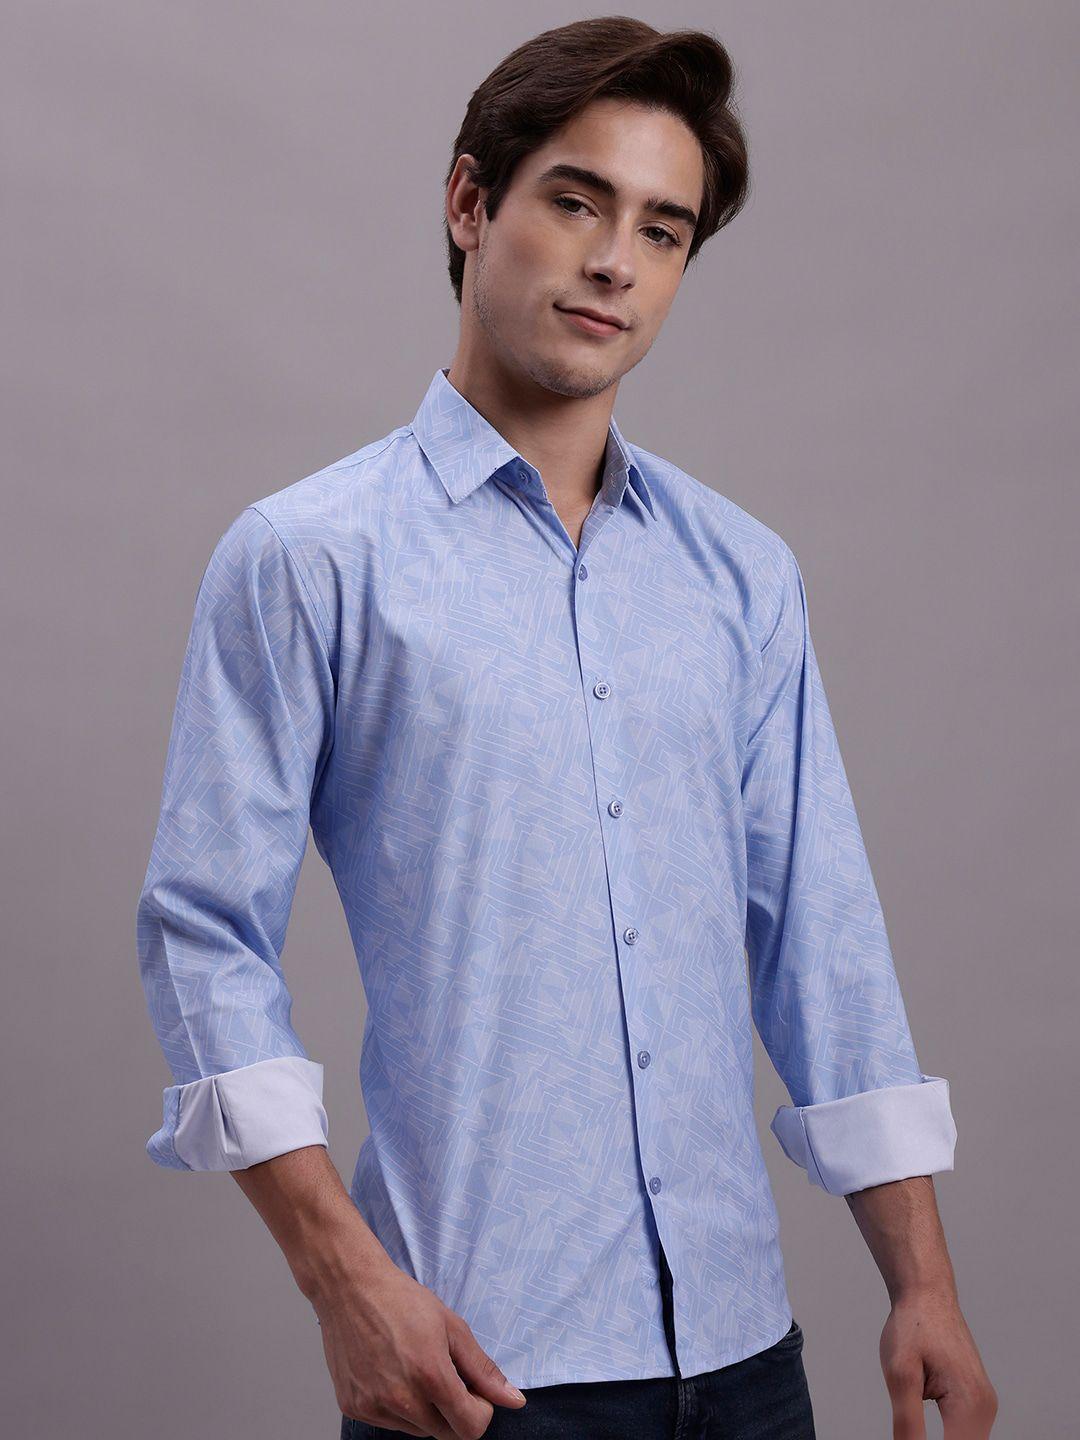 jainish classic geometric printed casual shirt